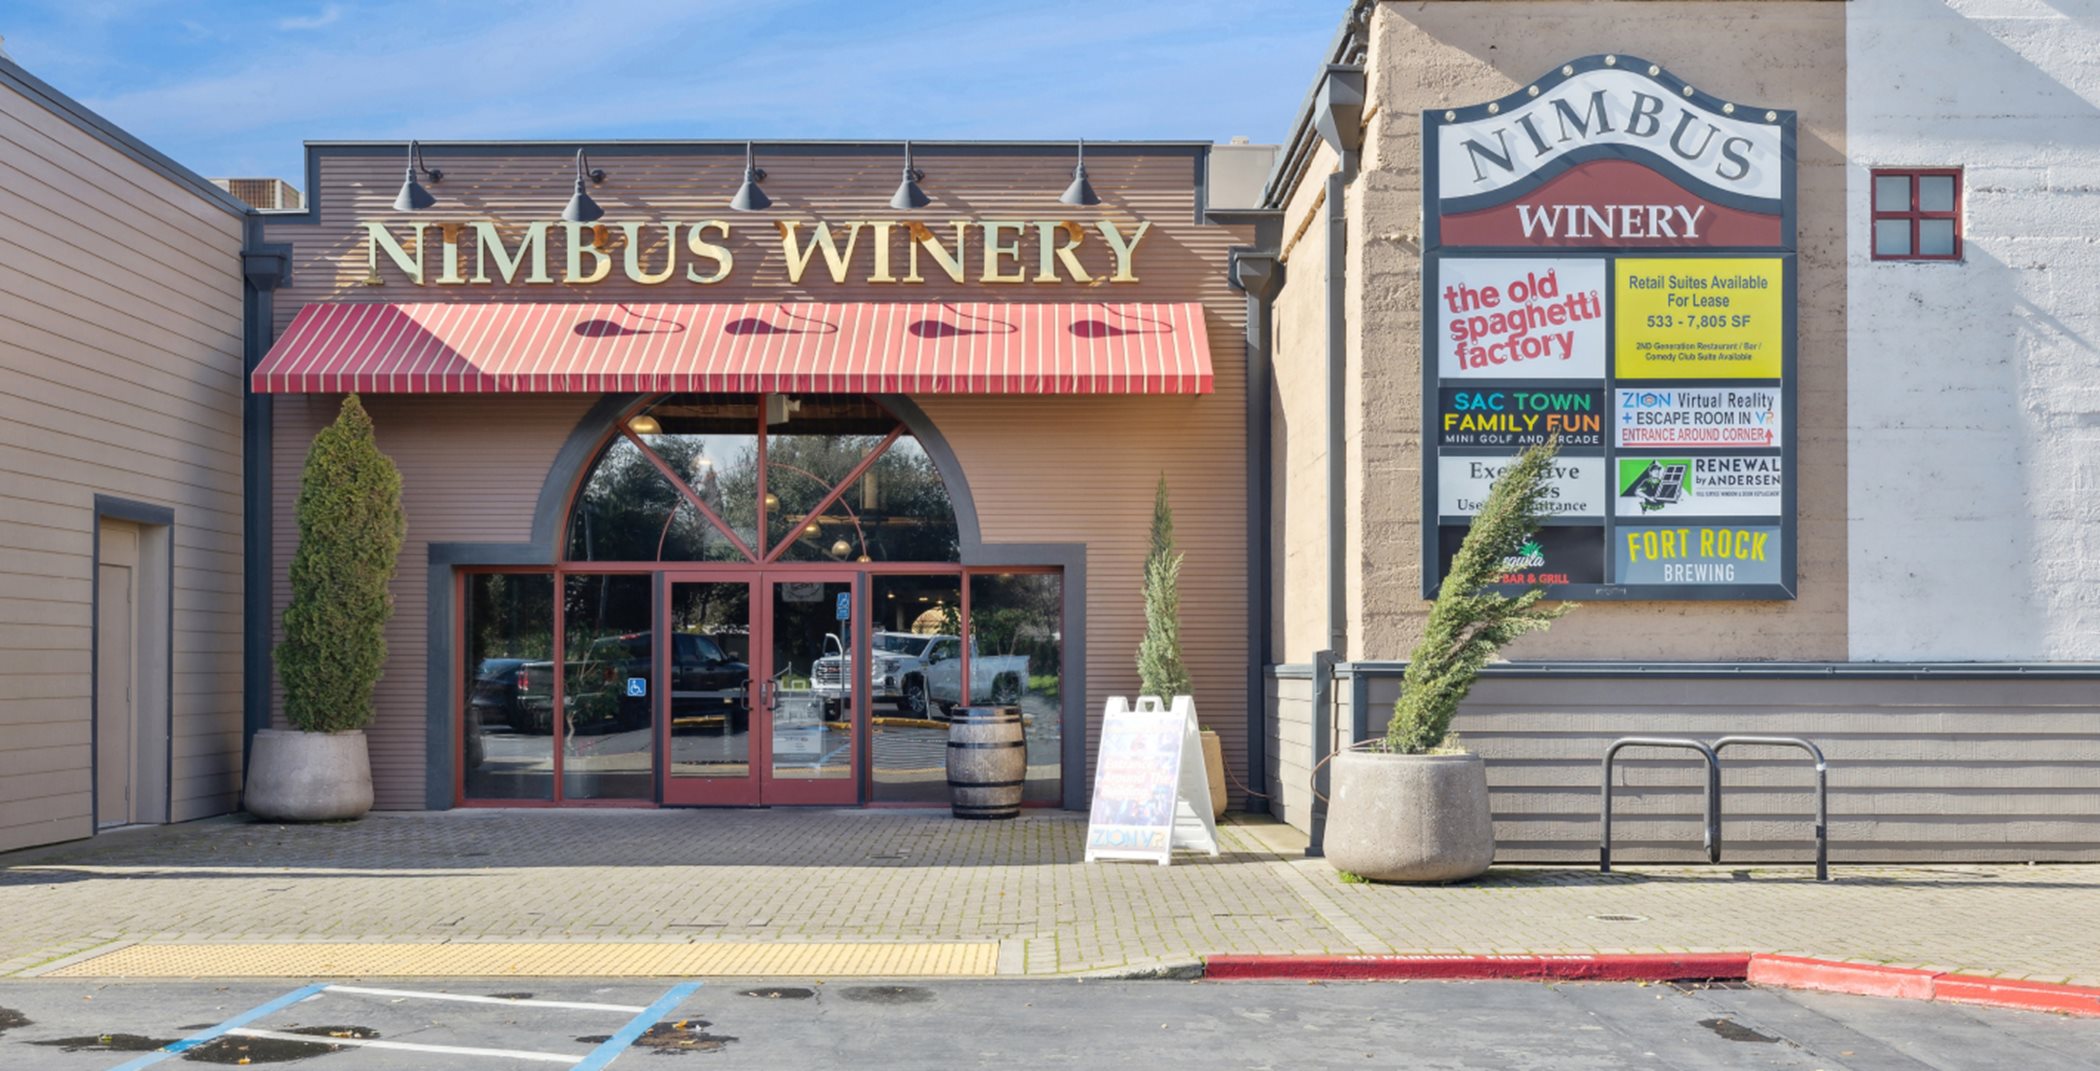 Close up of the Nimbus winery entrance